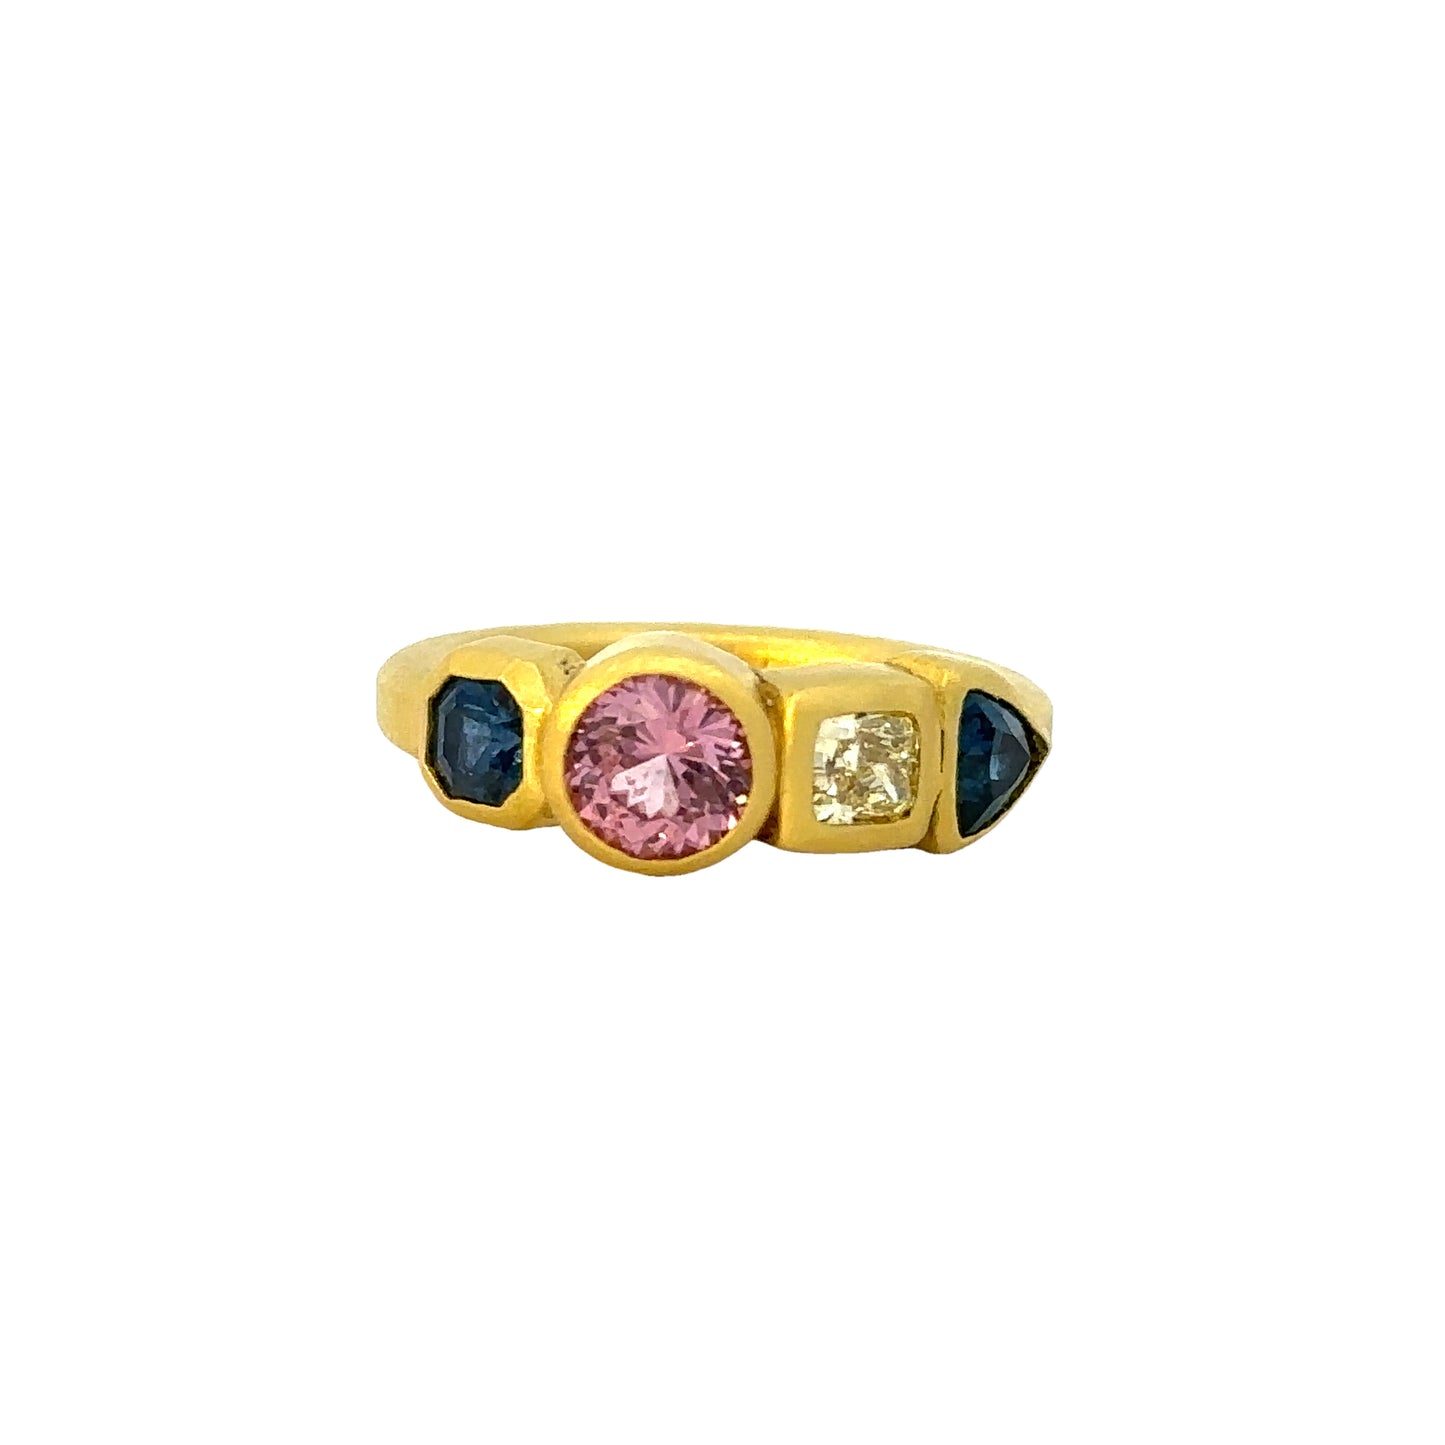 jewl // 012 - one of a kind ring - ghanite + lotus garnet + diamond